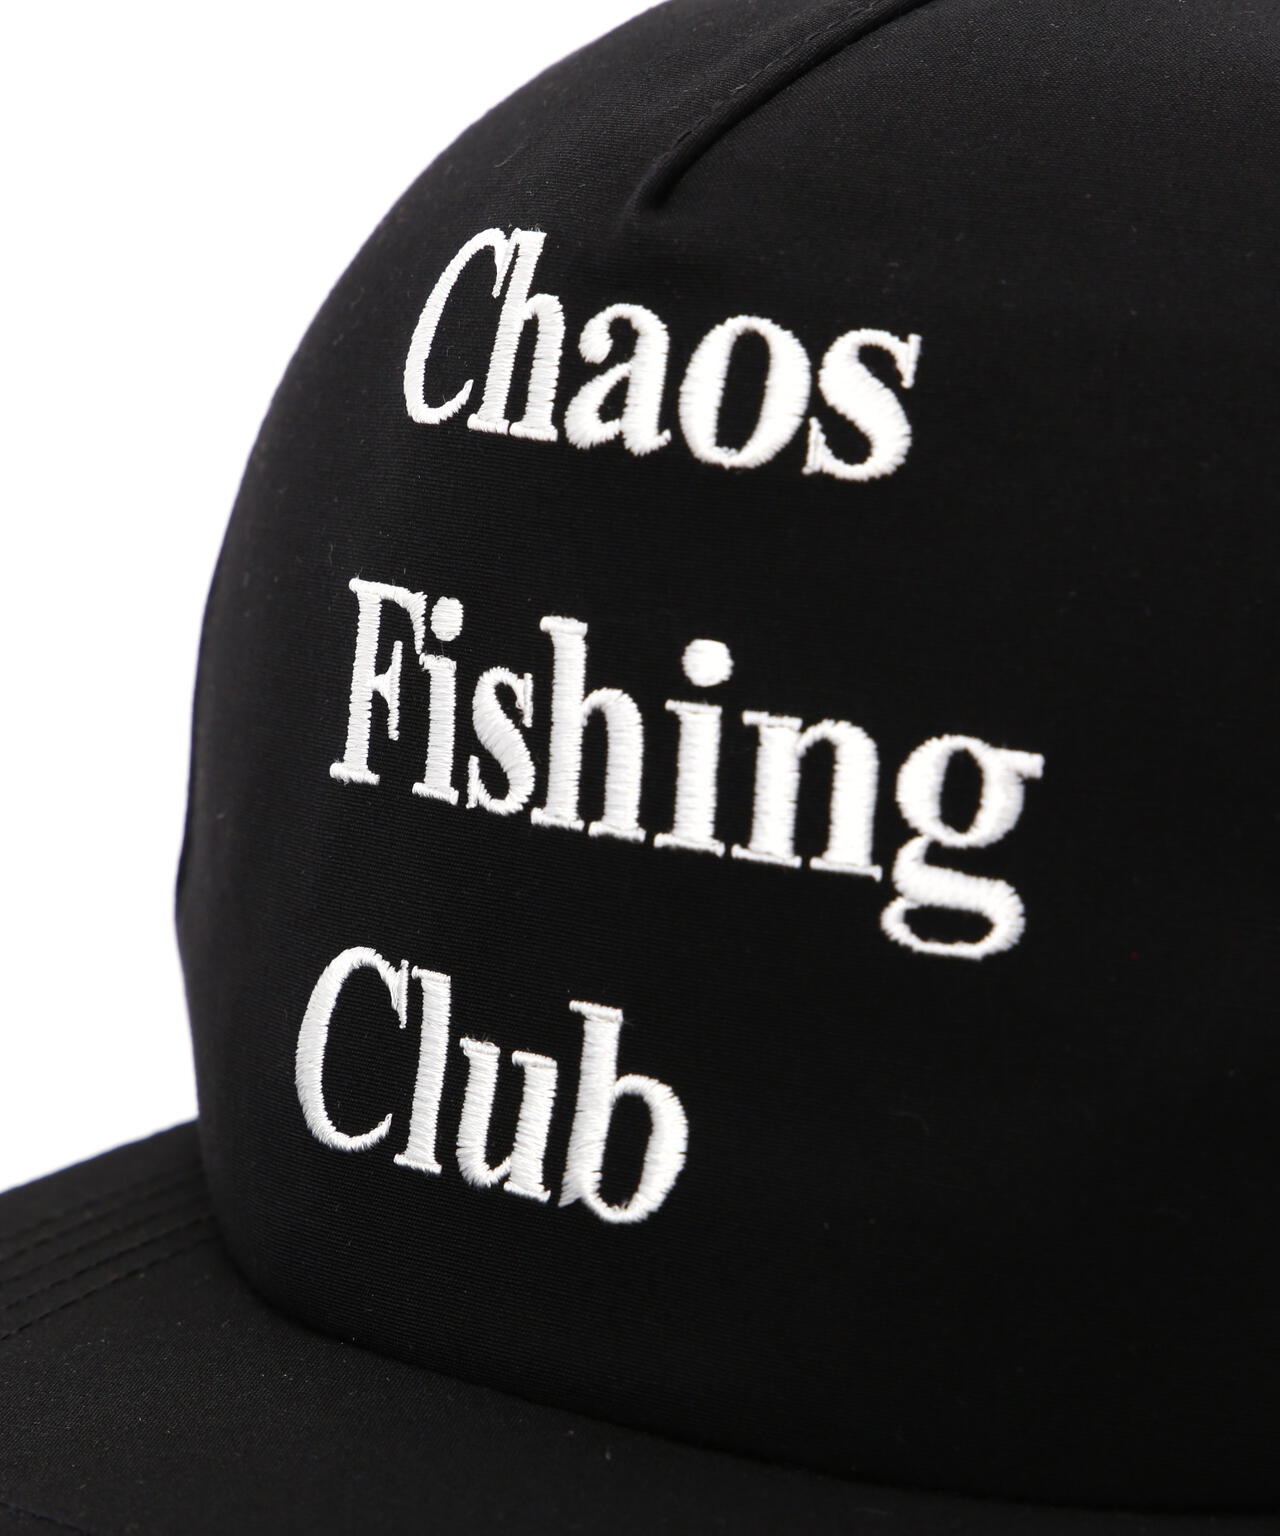 Chaos Fishing Club/カオスフィッシングクラブ LOGO CAP | BEAVER 